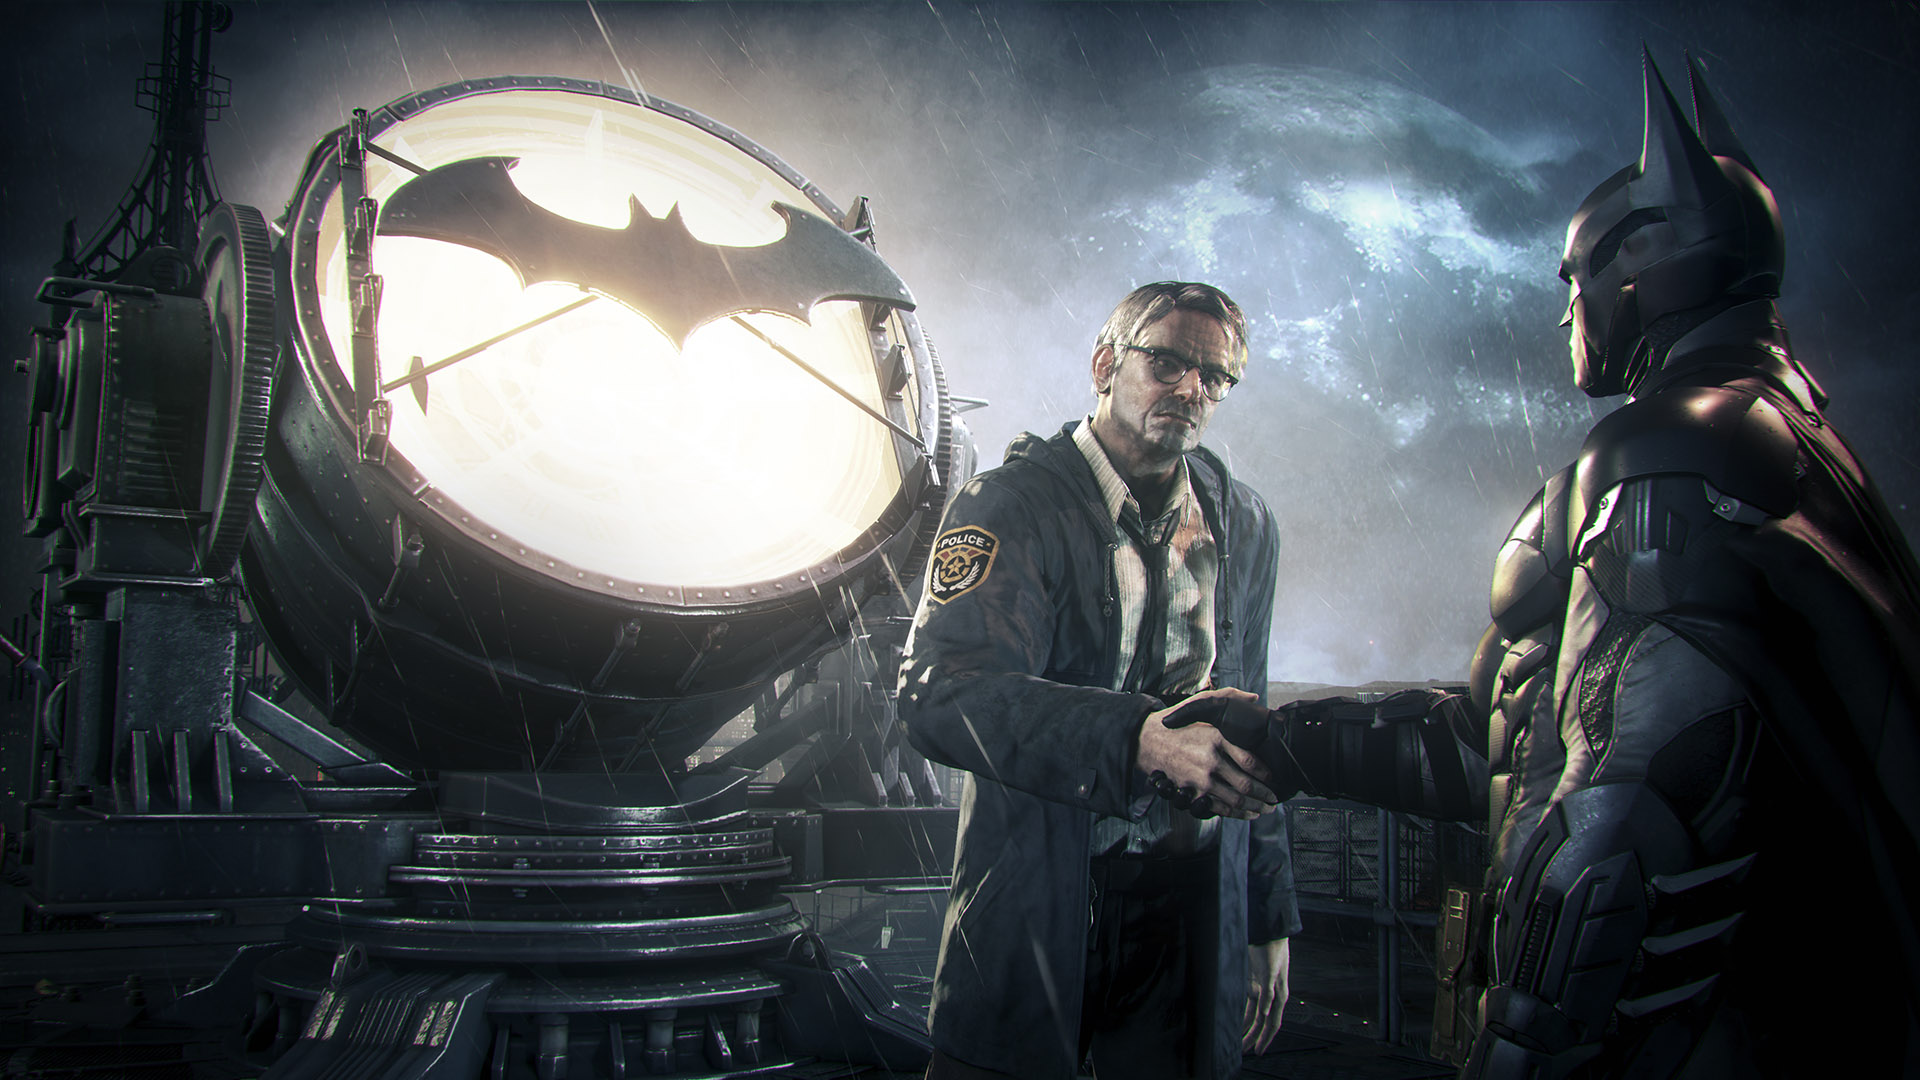 Fresh Batman: Arkham Knight shots emerge from the shadows | BrutalGamer